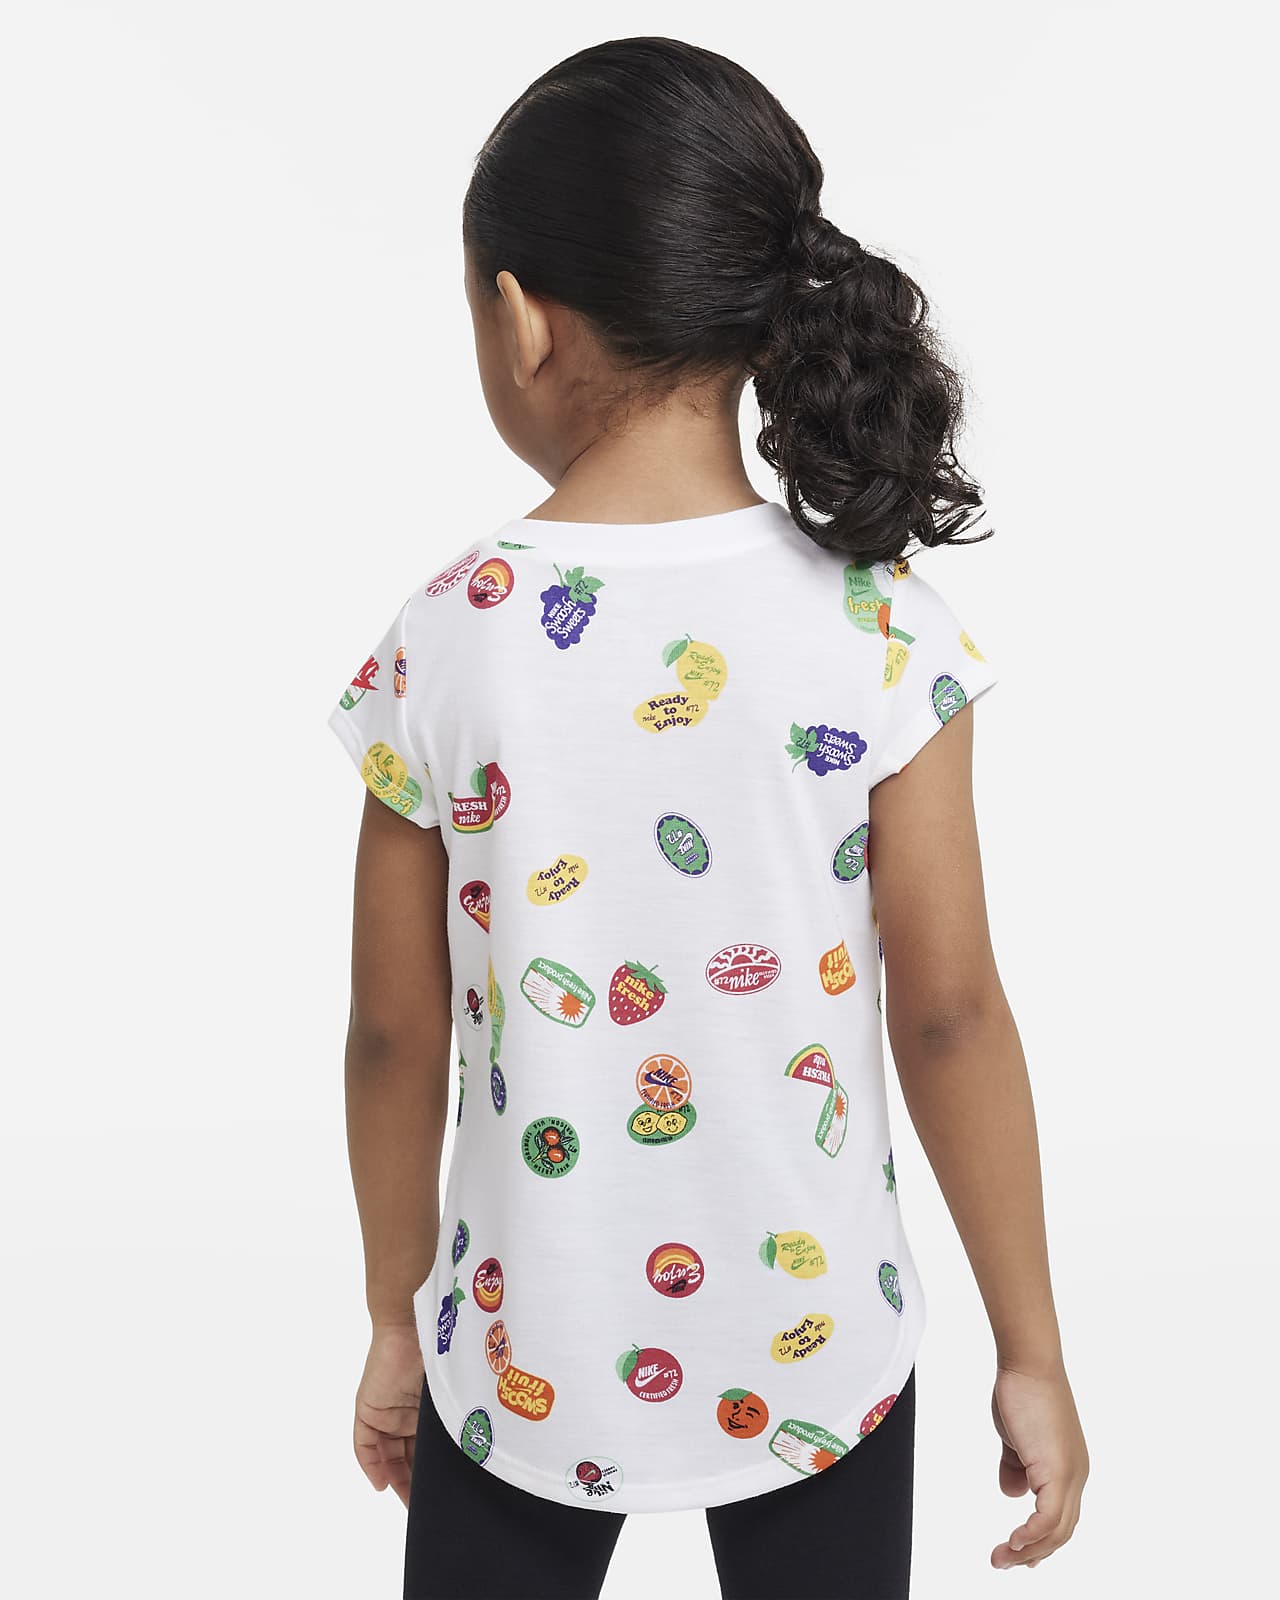 Nike Camiseta - Niño/a pequeño/a.